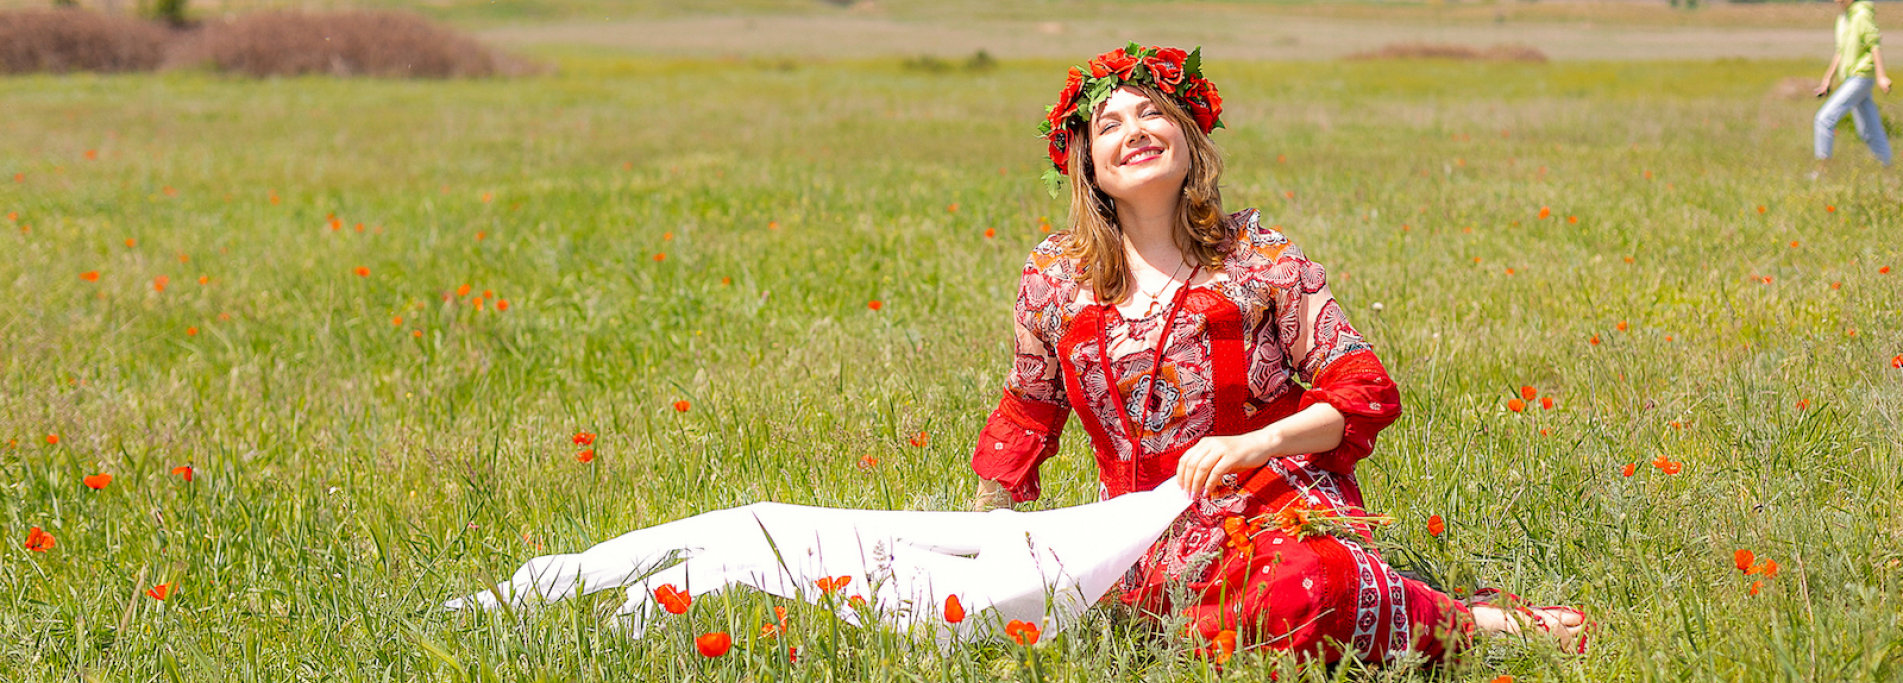 Poppy fields of Kyrgyzstan  - Splendor of the Chui valley